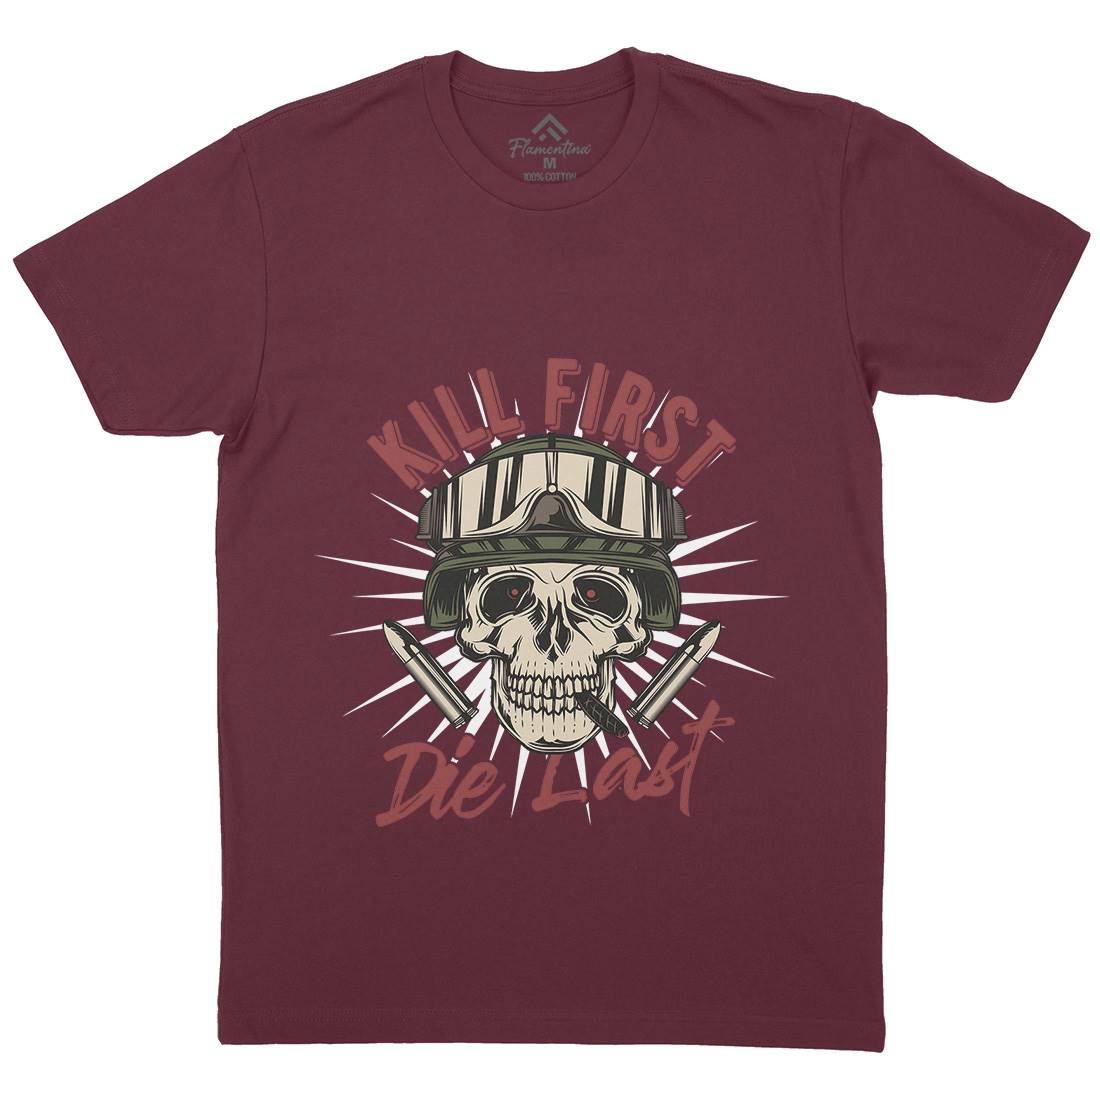 Kill First Mens Crew Neck T-Shirt Army C890